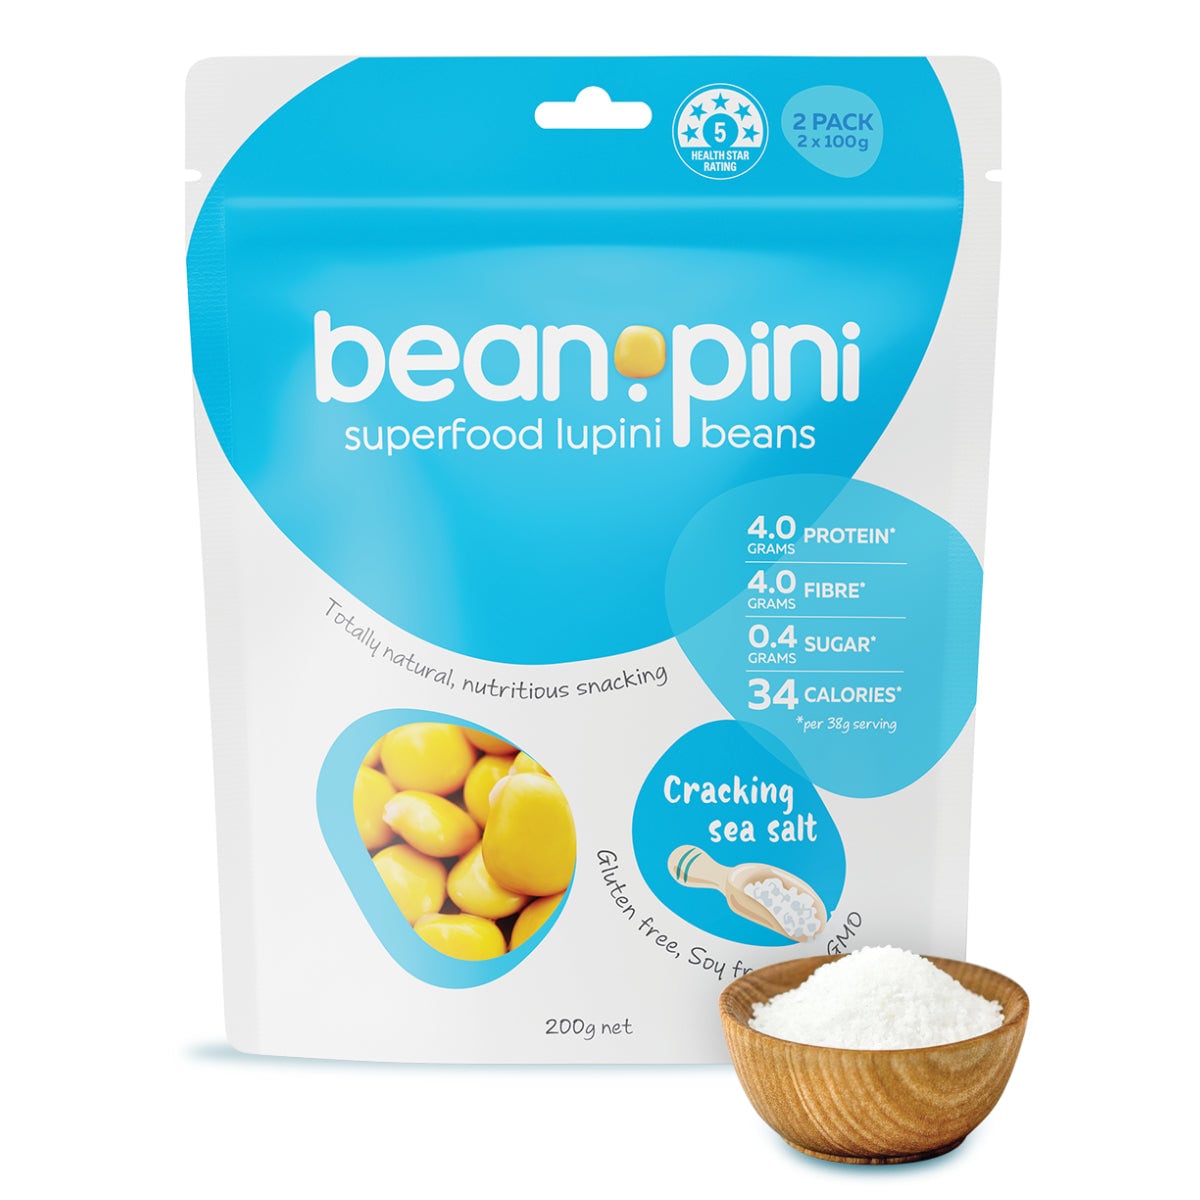 Beanopini Lupini Beans Cracking Sea Salt 200g